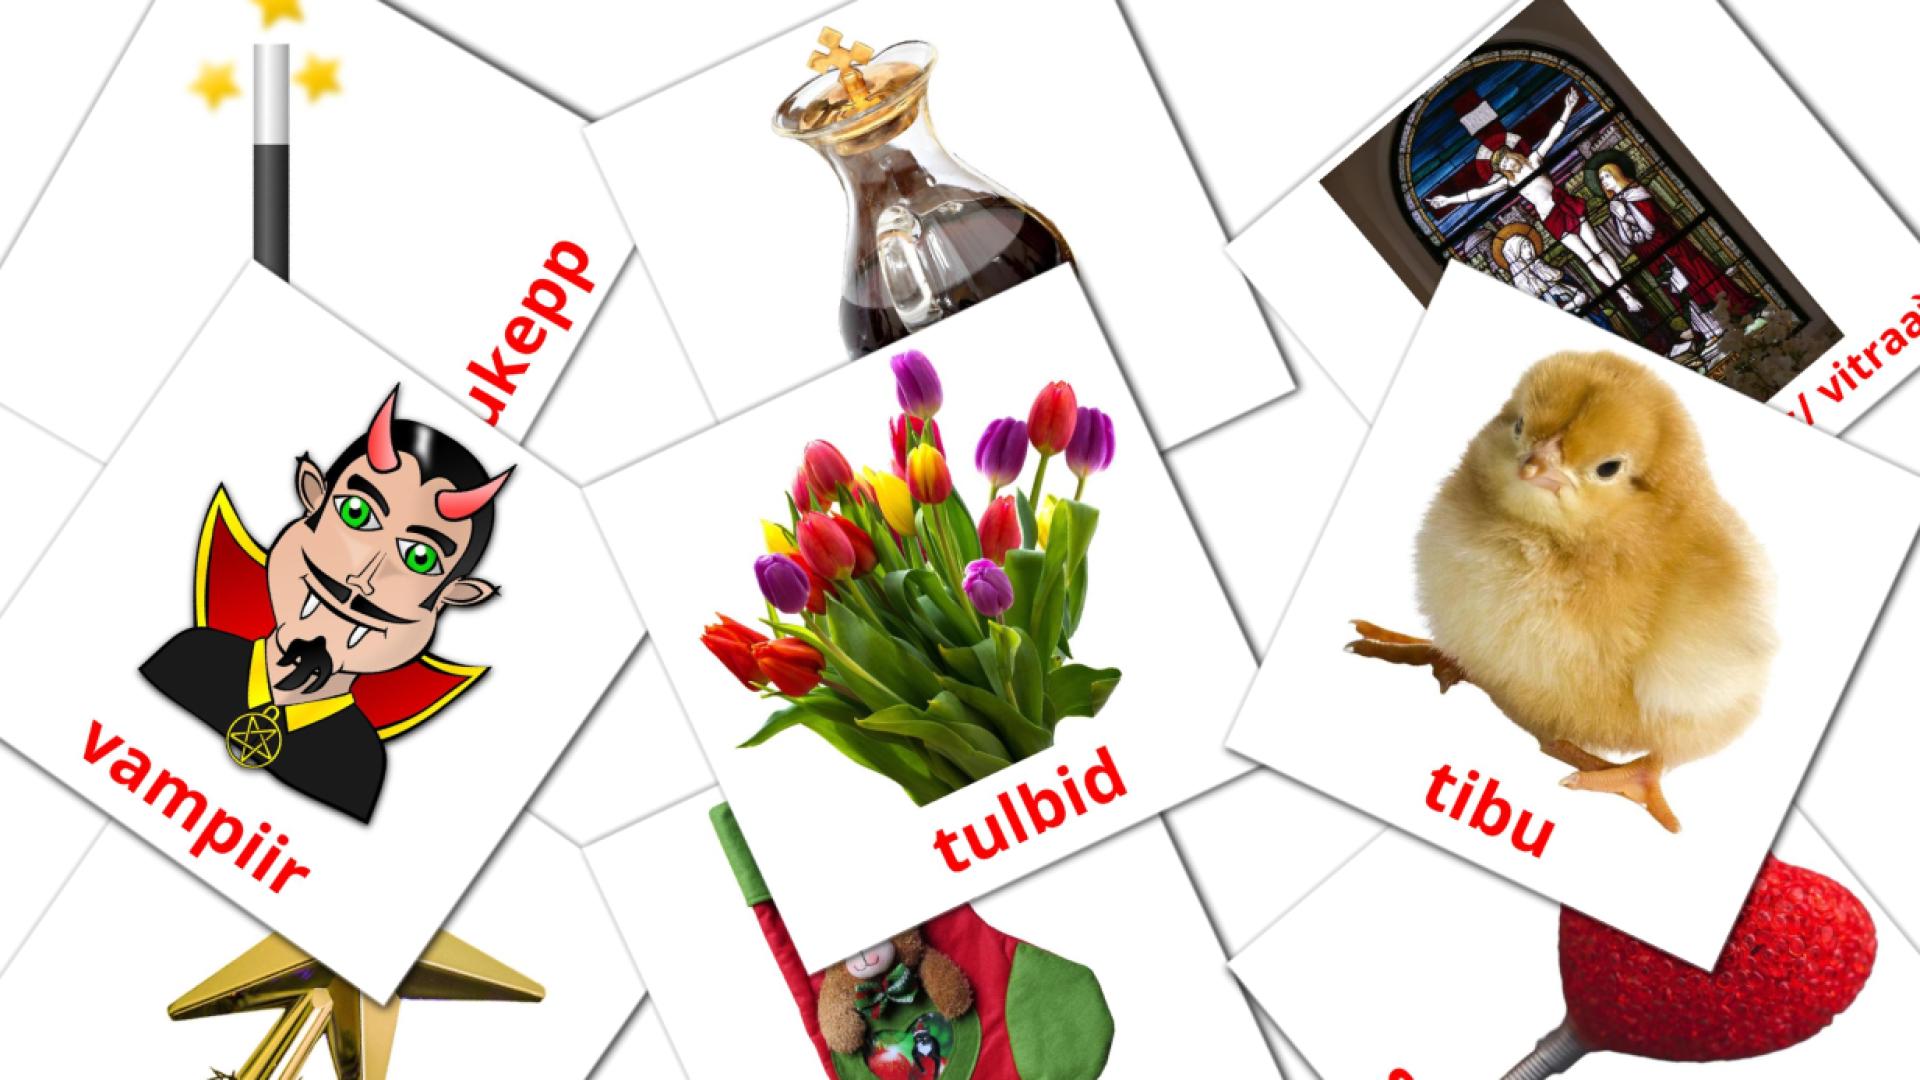 pühad estlands woordenschat flashcards